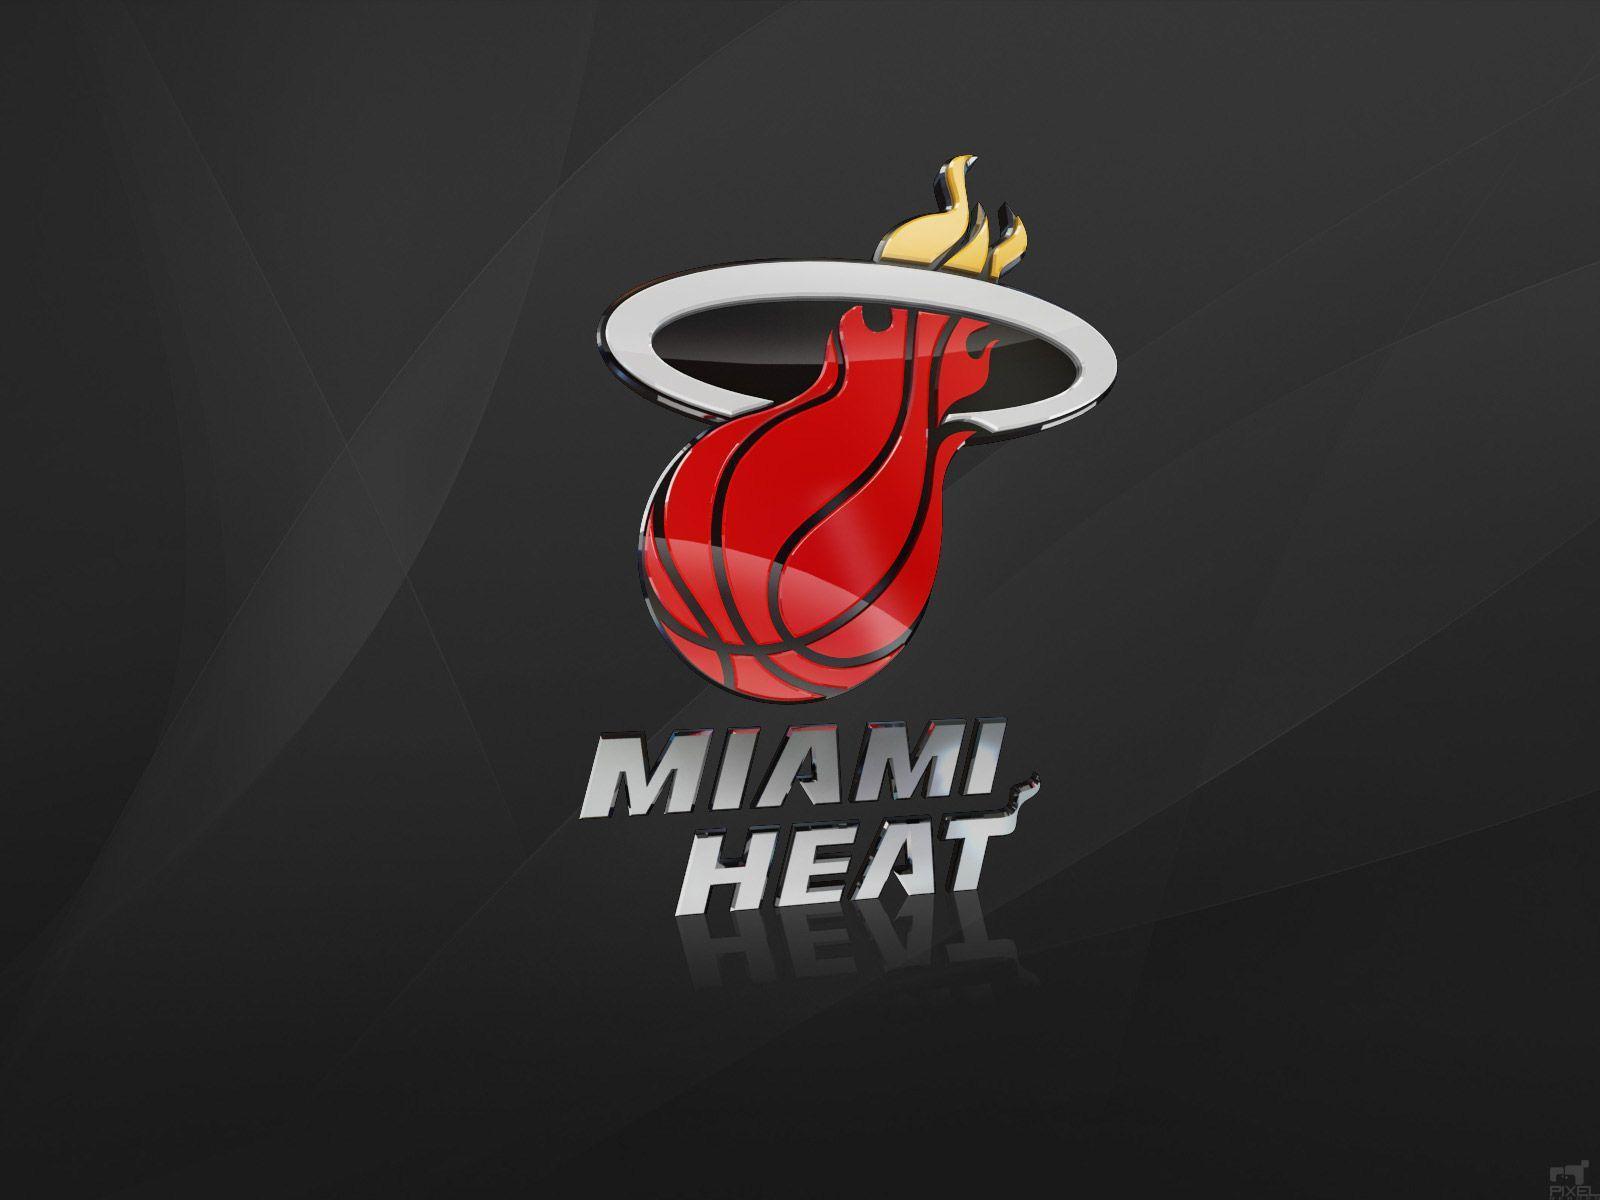 Miami Heat 3D Logo Wallpaper. Basketball Wallpaper at